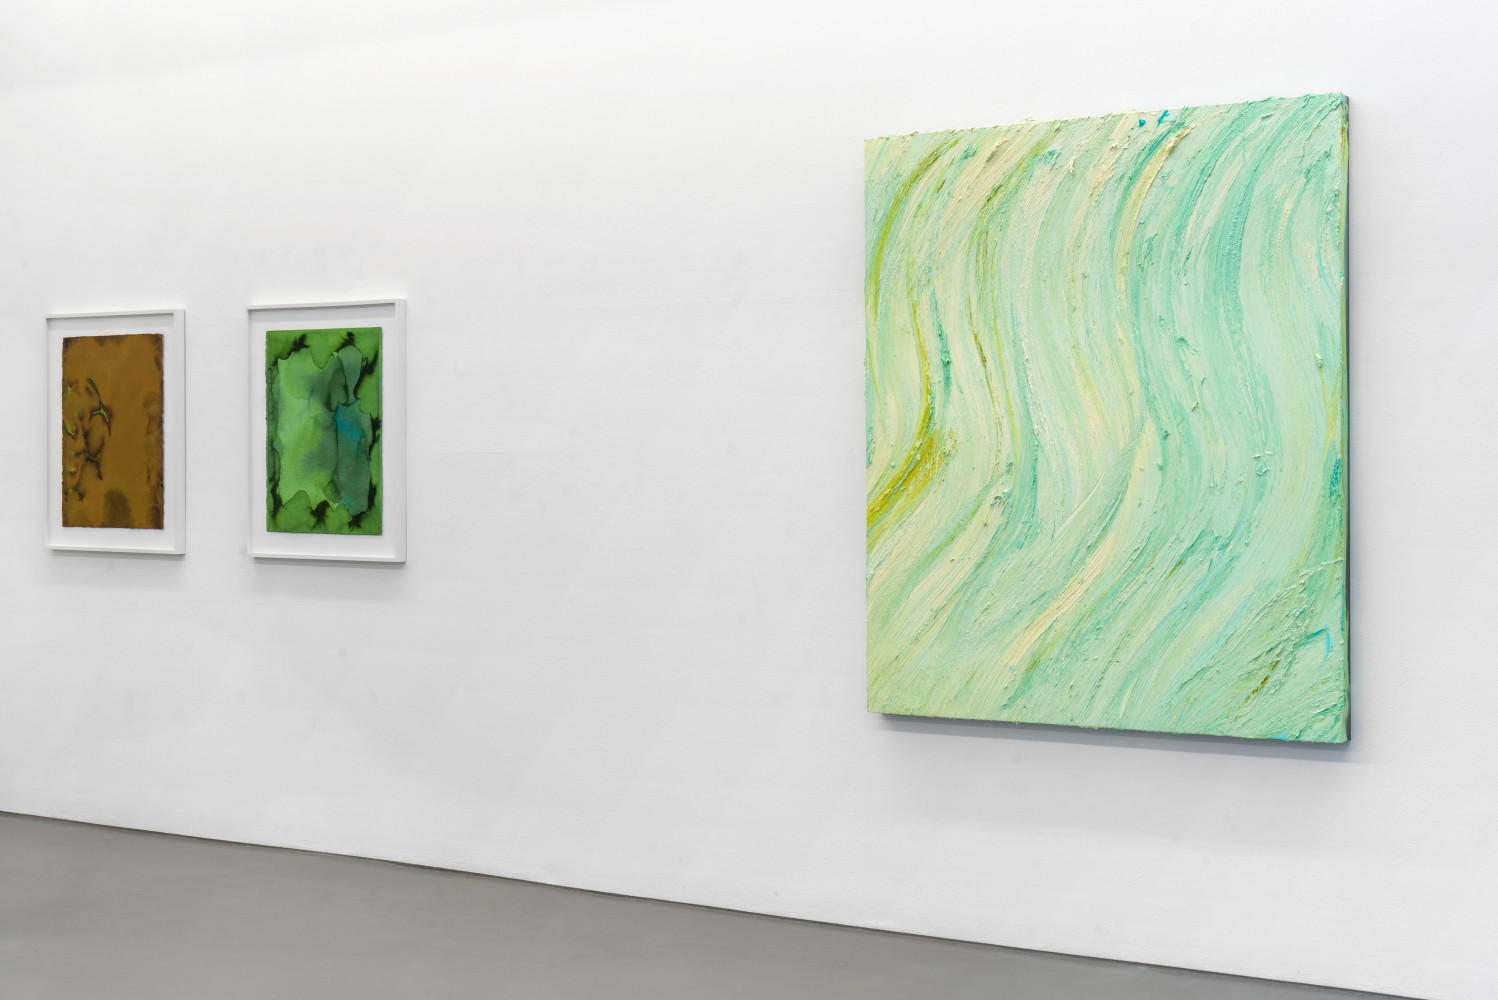 Jason Martin, ‘Reise ans Mittelmeer – Daniel Buren, Balthasar Burkhard, Jason Martin’, Installation view, Buchmann Galerie, 2021